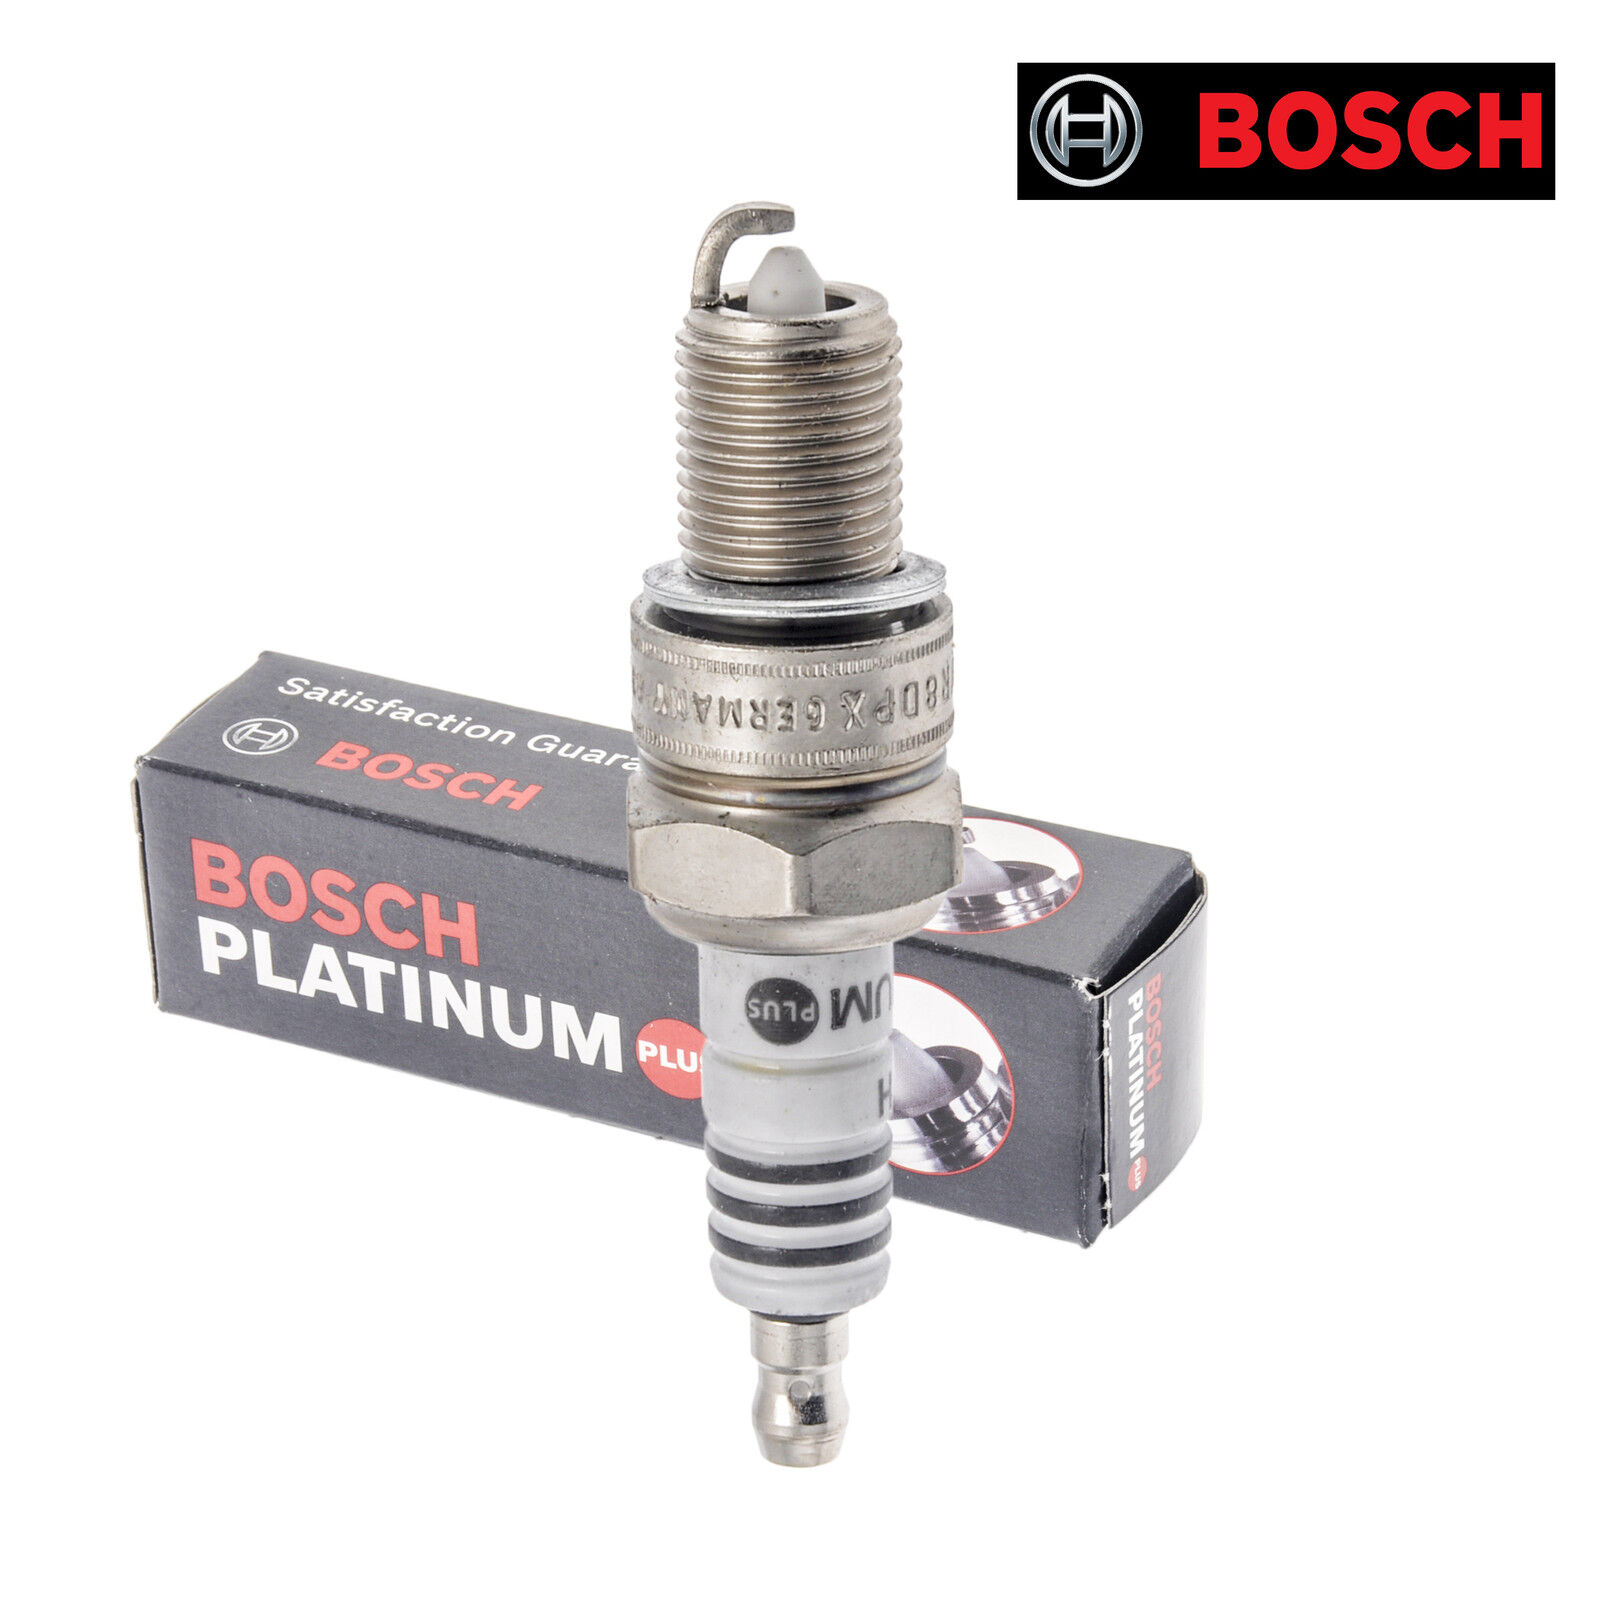 New Bosch 4019 Platinum Plus Spark Plug